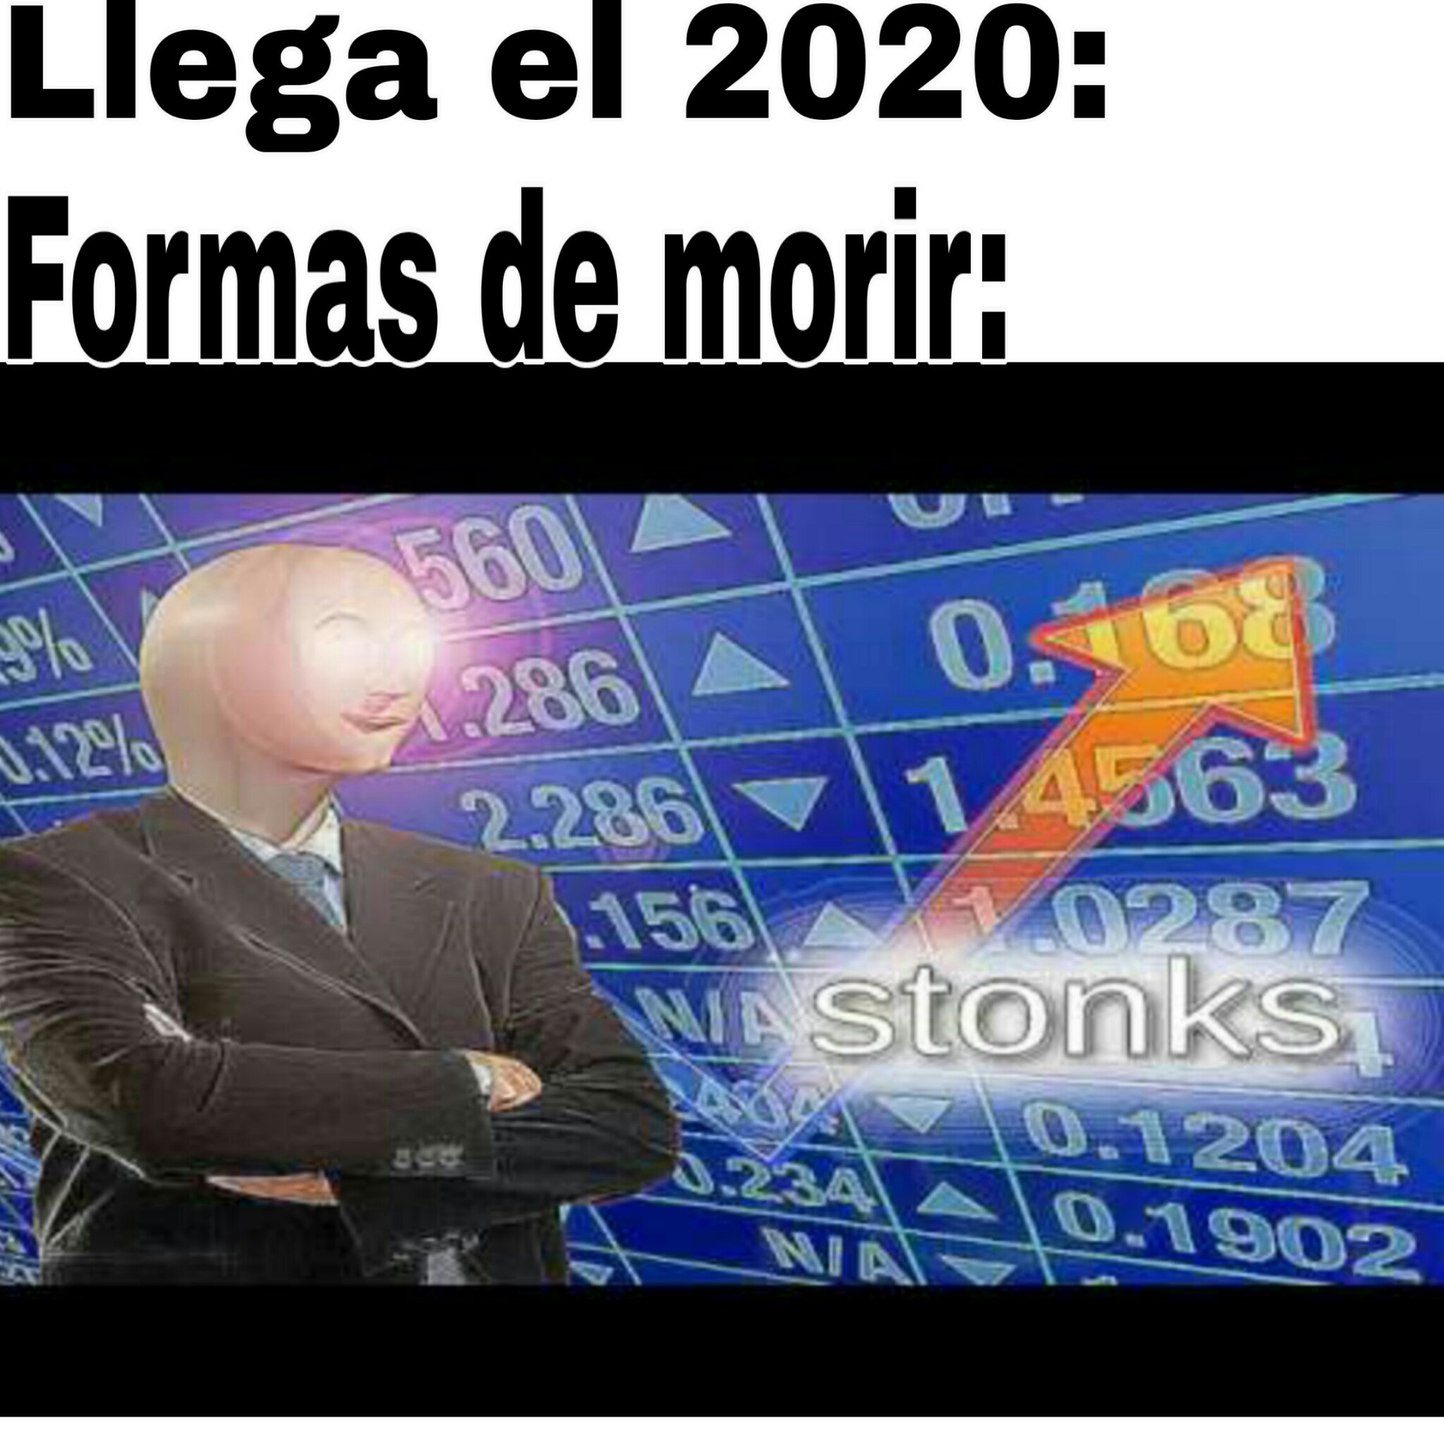 FORMAS DE MORIR:STONKS - meme